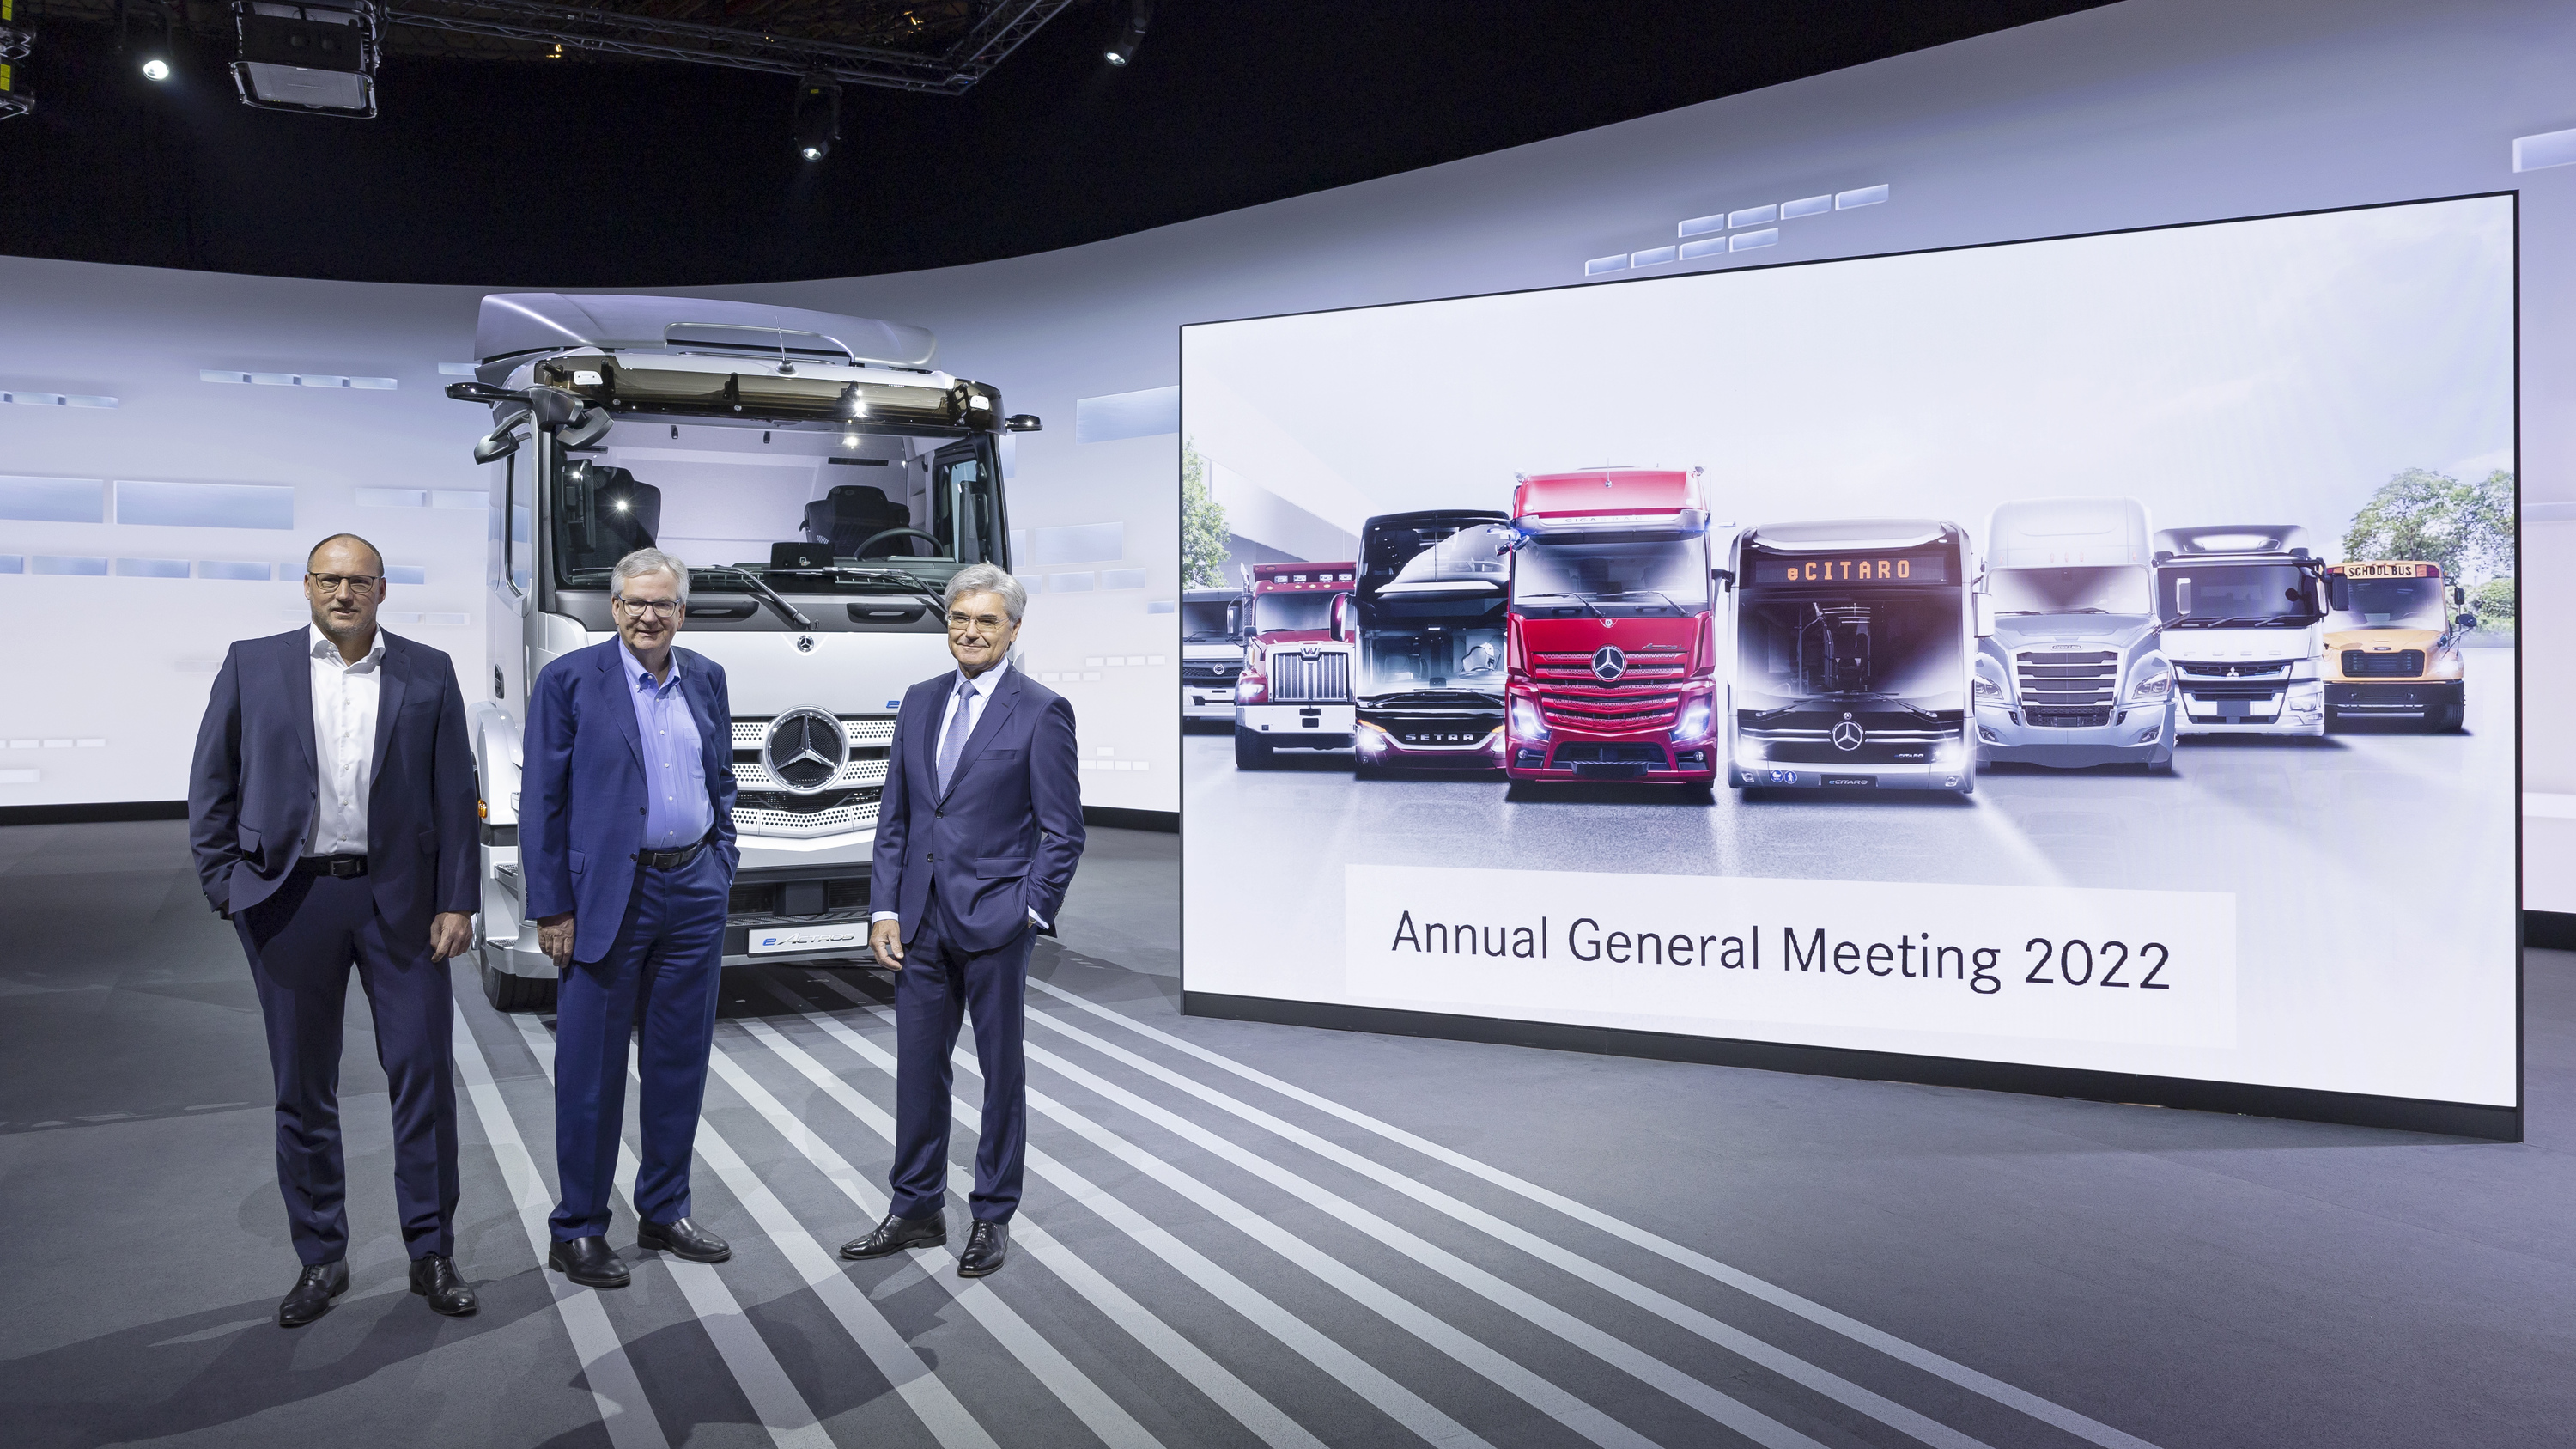 Daimler Truck Holding AG's First Annual General Meeting (from left to right): Jochen Goetz, Martin Daum, Joe Kaeser